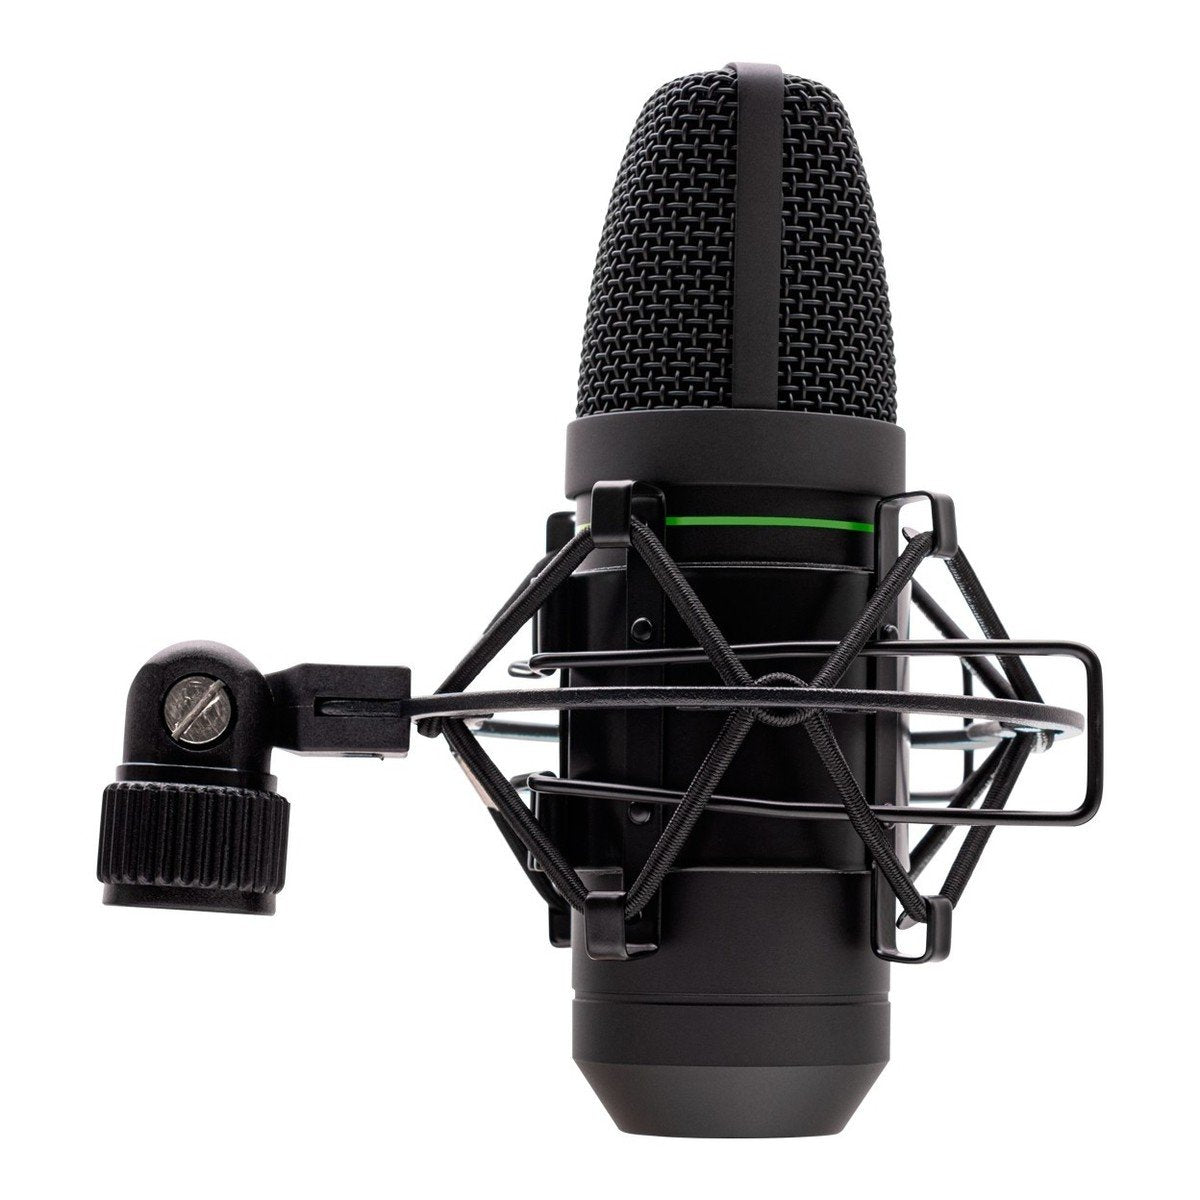 Mackie EM-91C Large-Diaphragm Condenser Microphone - DY Pro Audio